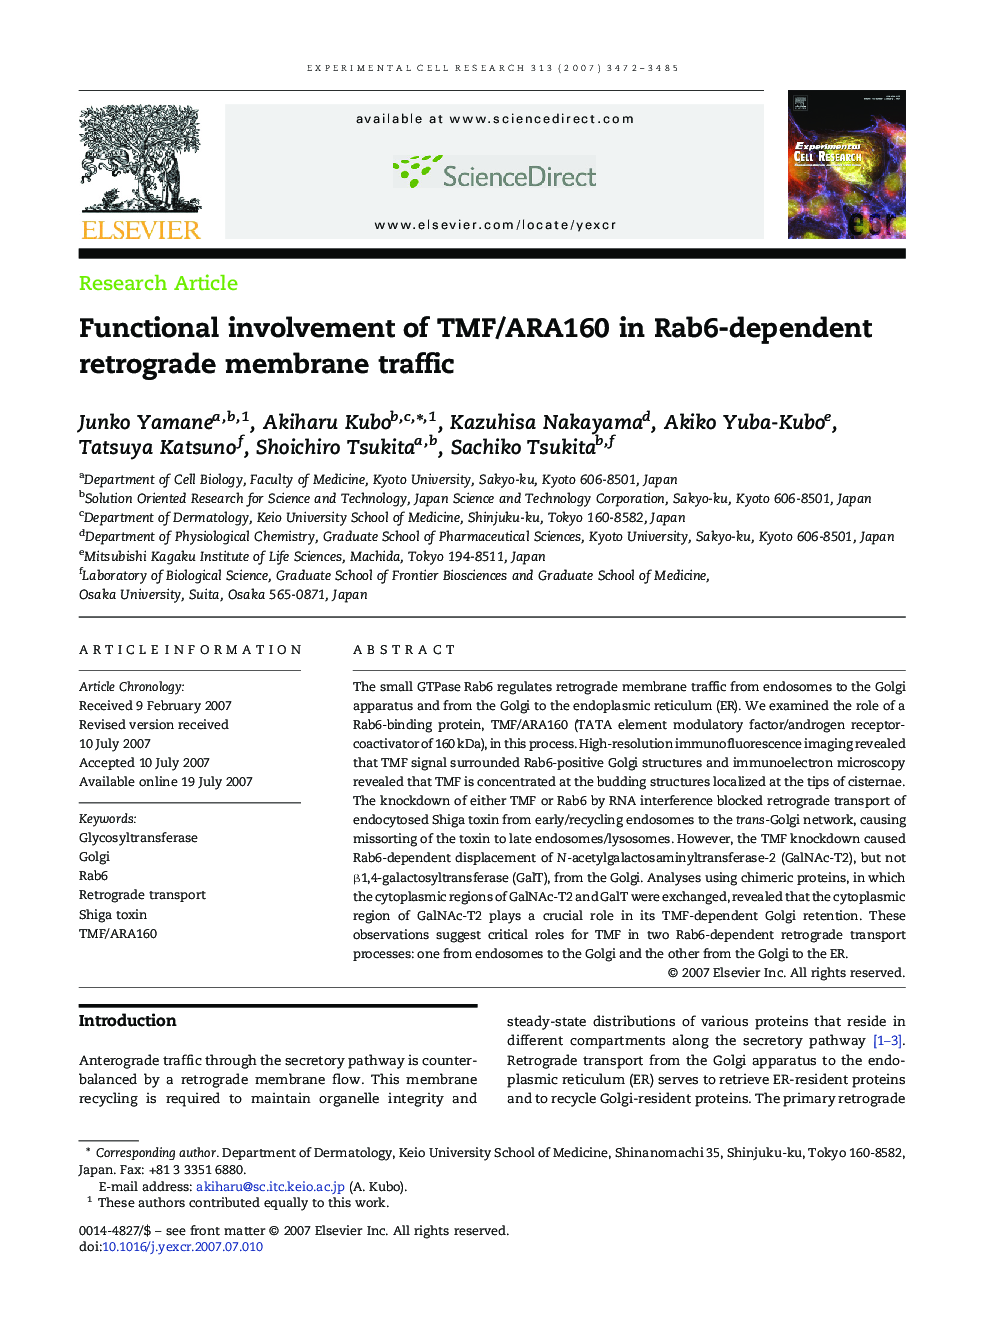 Functional involvement of TMF/ARA160 in Rab6-dependent retrograde membrane traffic